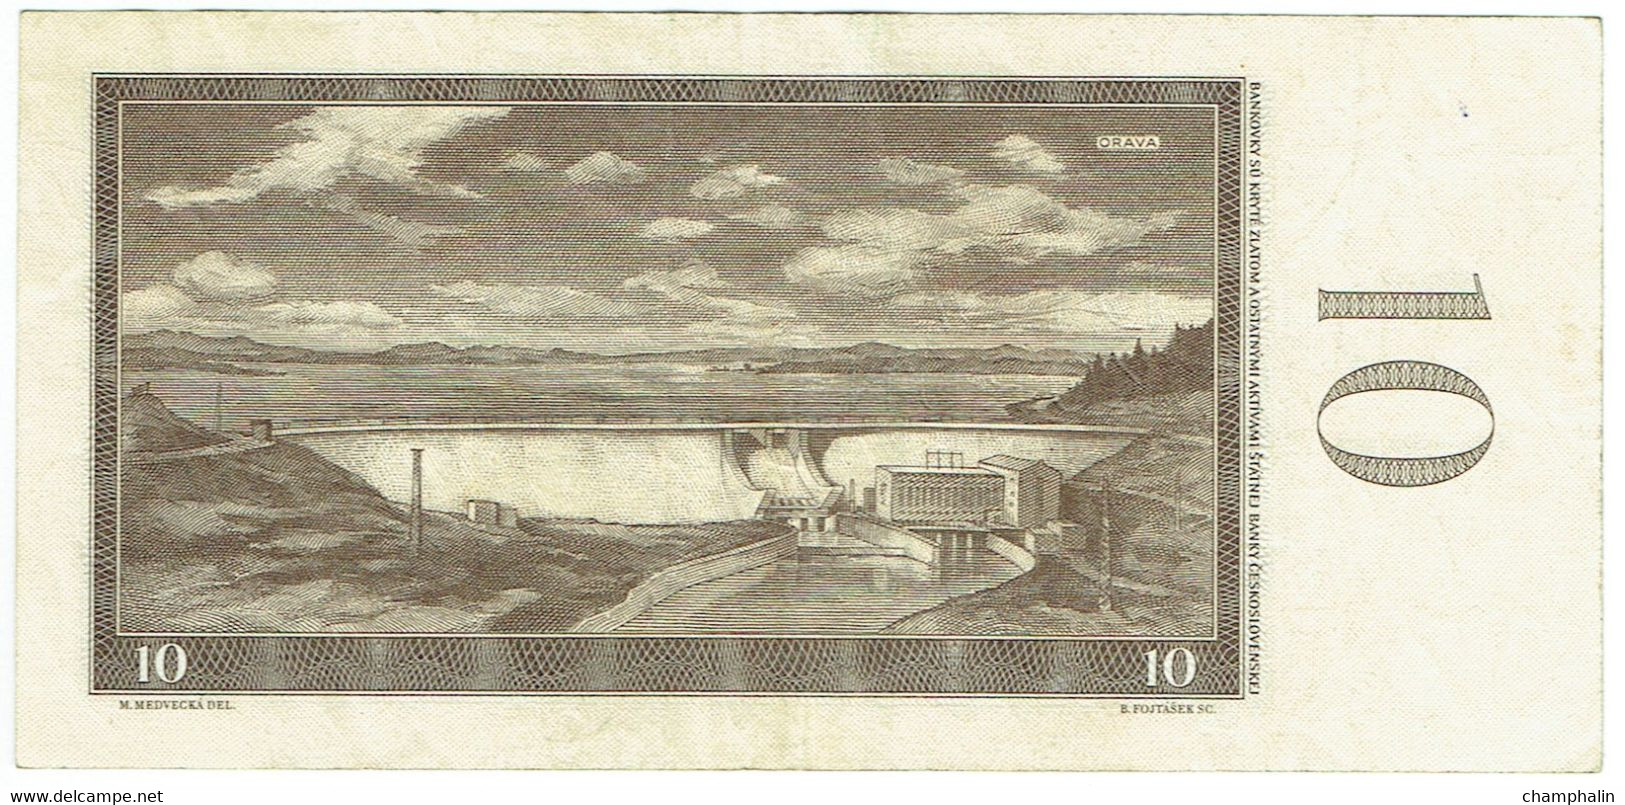 Tchécoslovaquie - Billet De 10 Korun - 1960 - P88b - Czechoslovakia